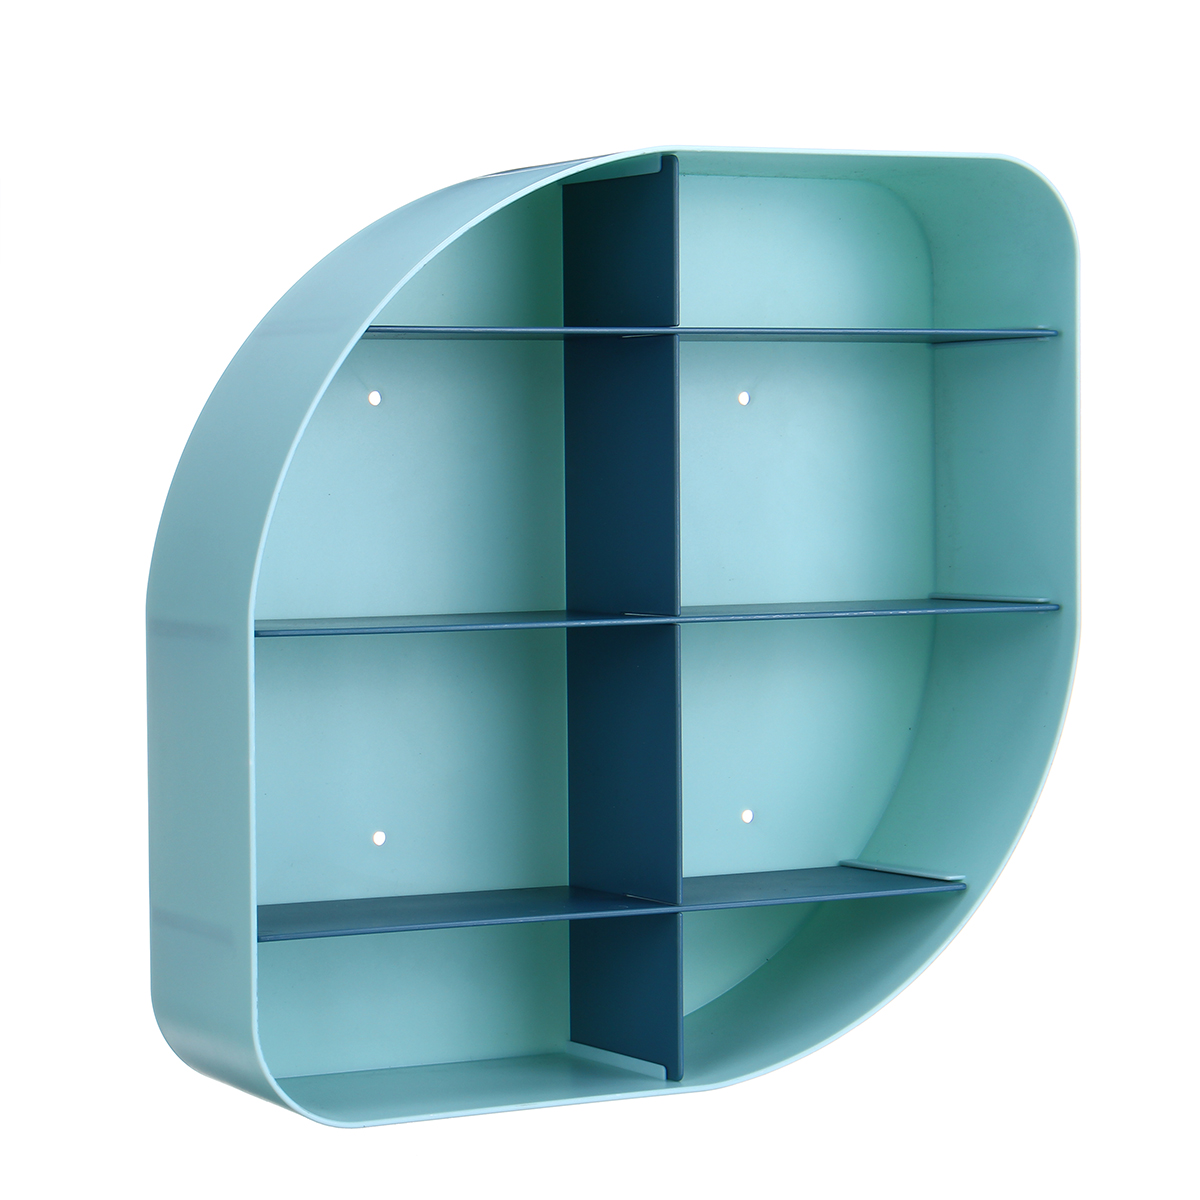 Floating-Cube-Shelves-Wall-Shelf-Hanging-Storage-Display-Bracket-Decor-Shelving-1561560-10